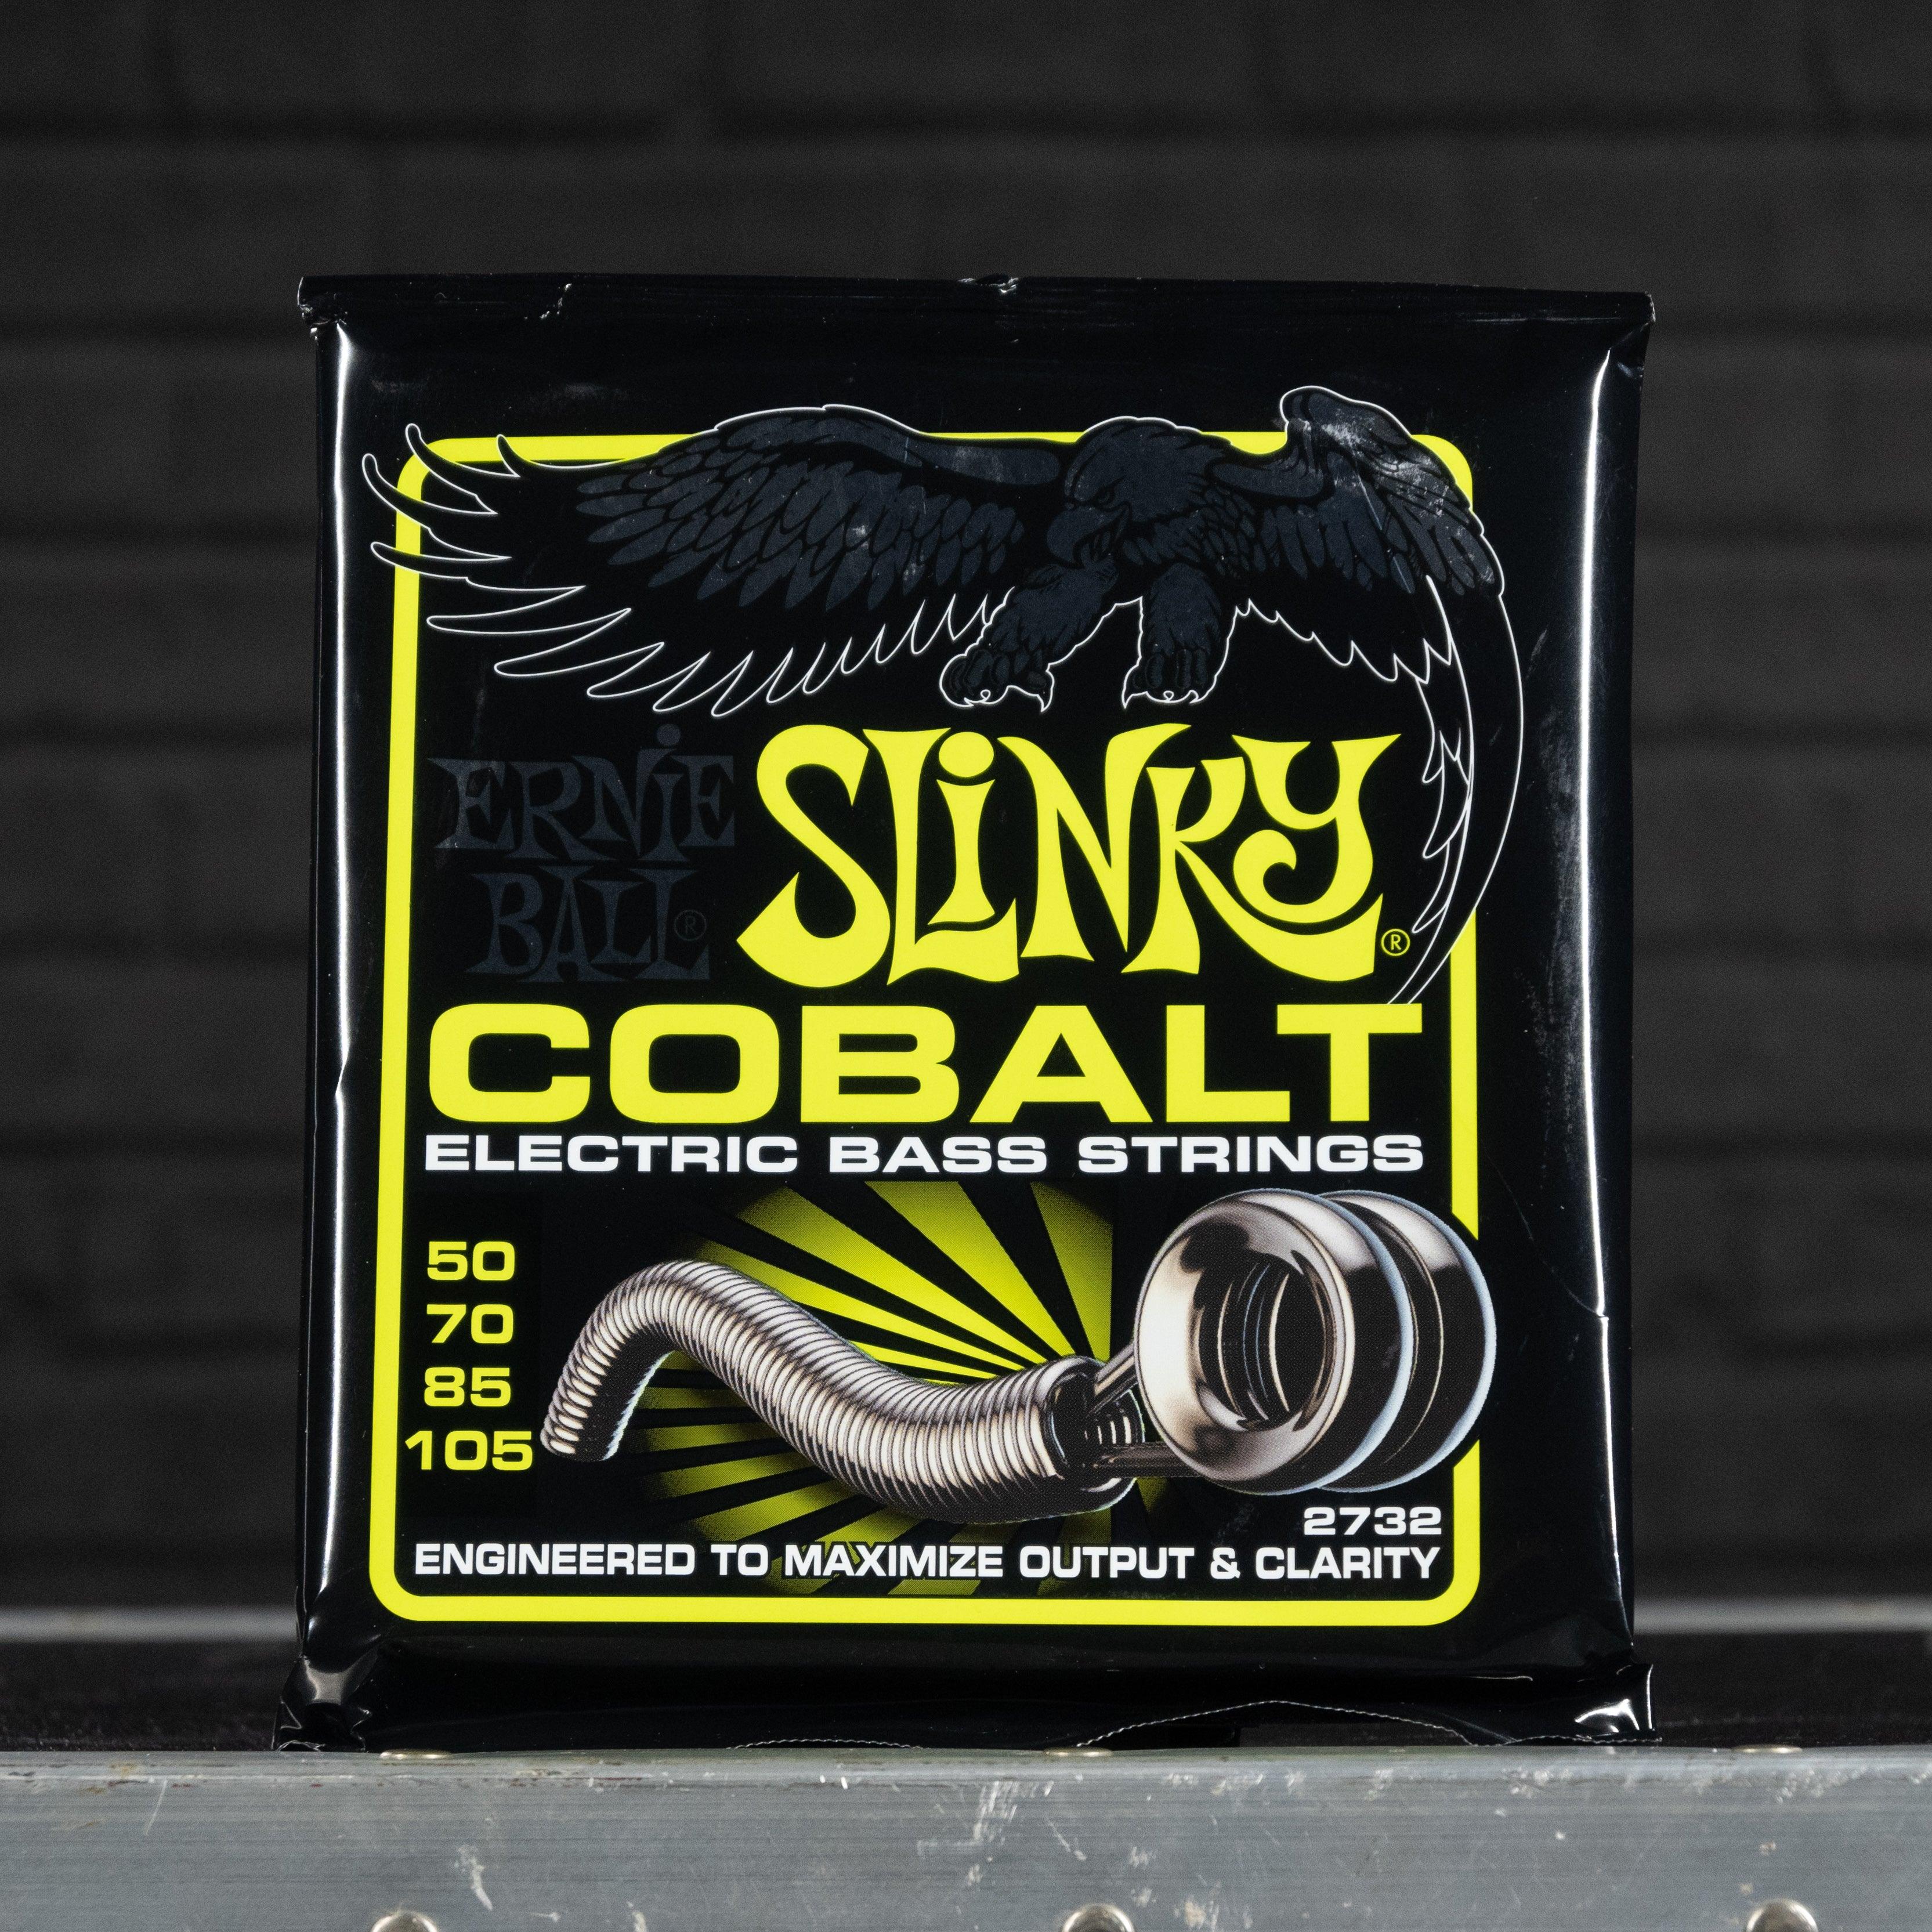 Ernie Ball Regular Slinky Cobalt Electric Bass Strings - 50-105 Gauge - Impulse Music Co.